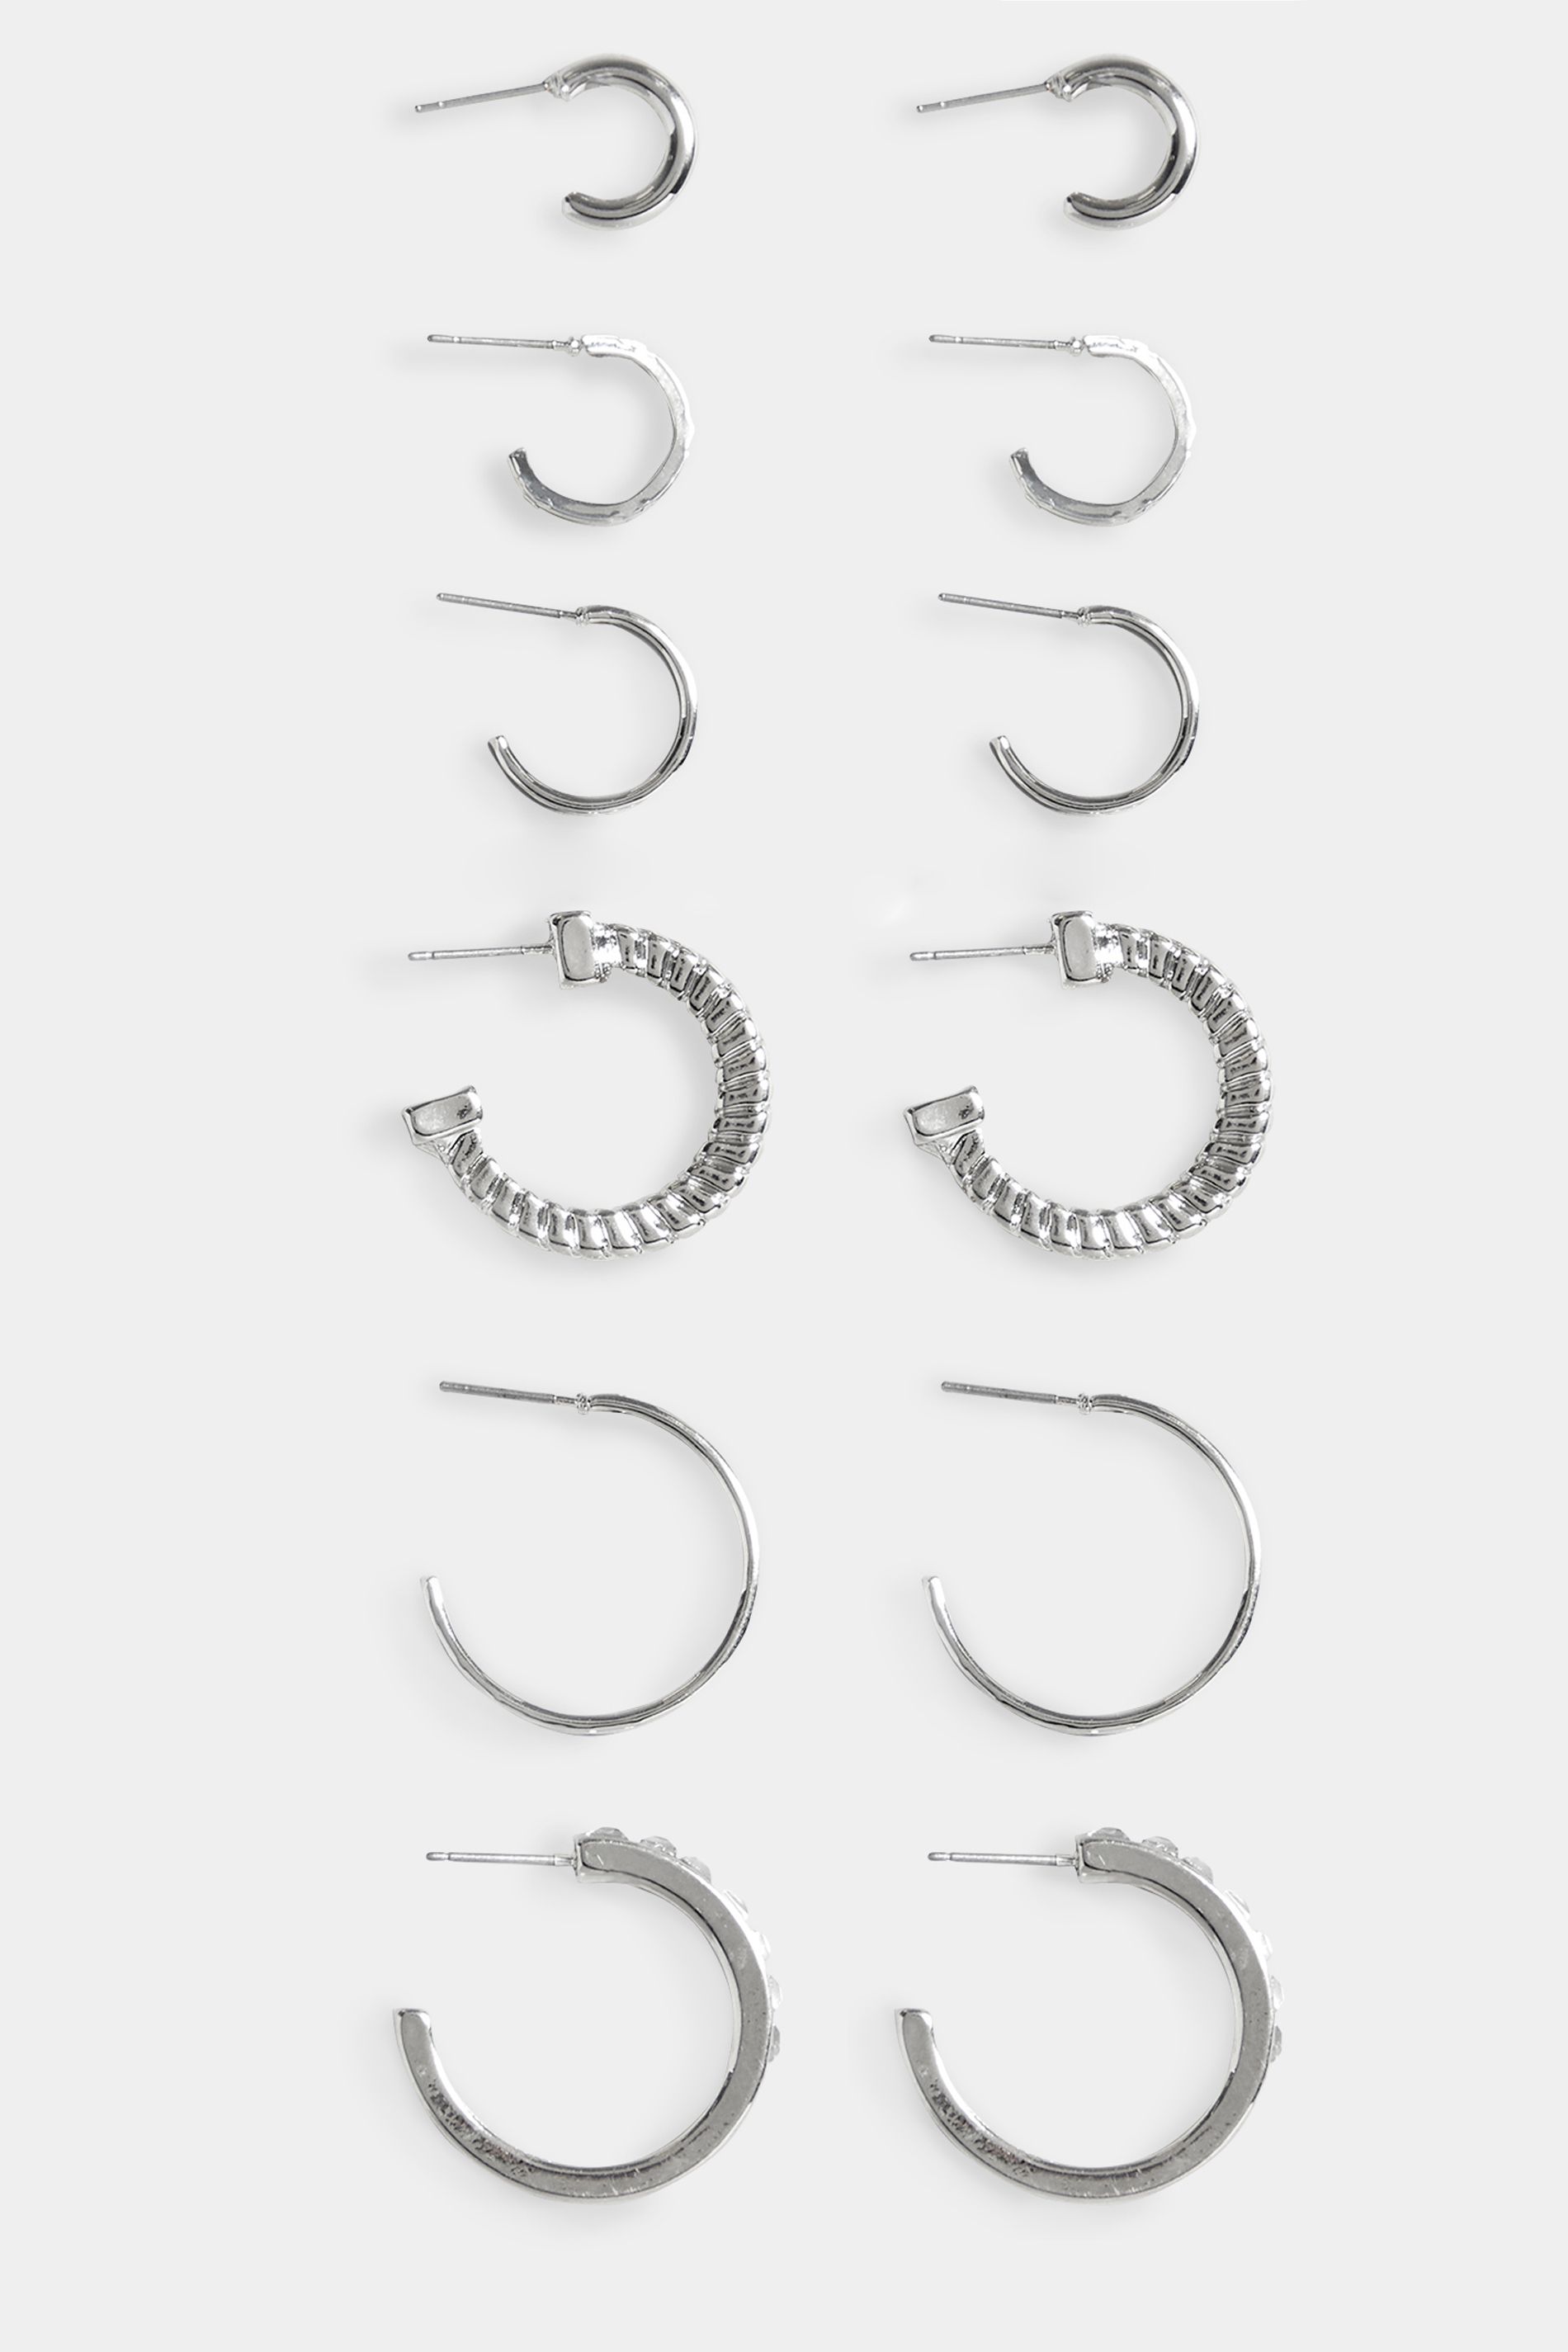 6 PACK Silver Tone Hoop Earrings | Yours Clothing 3